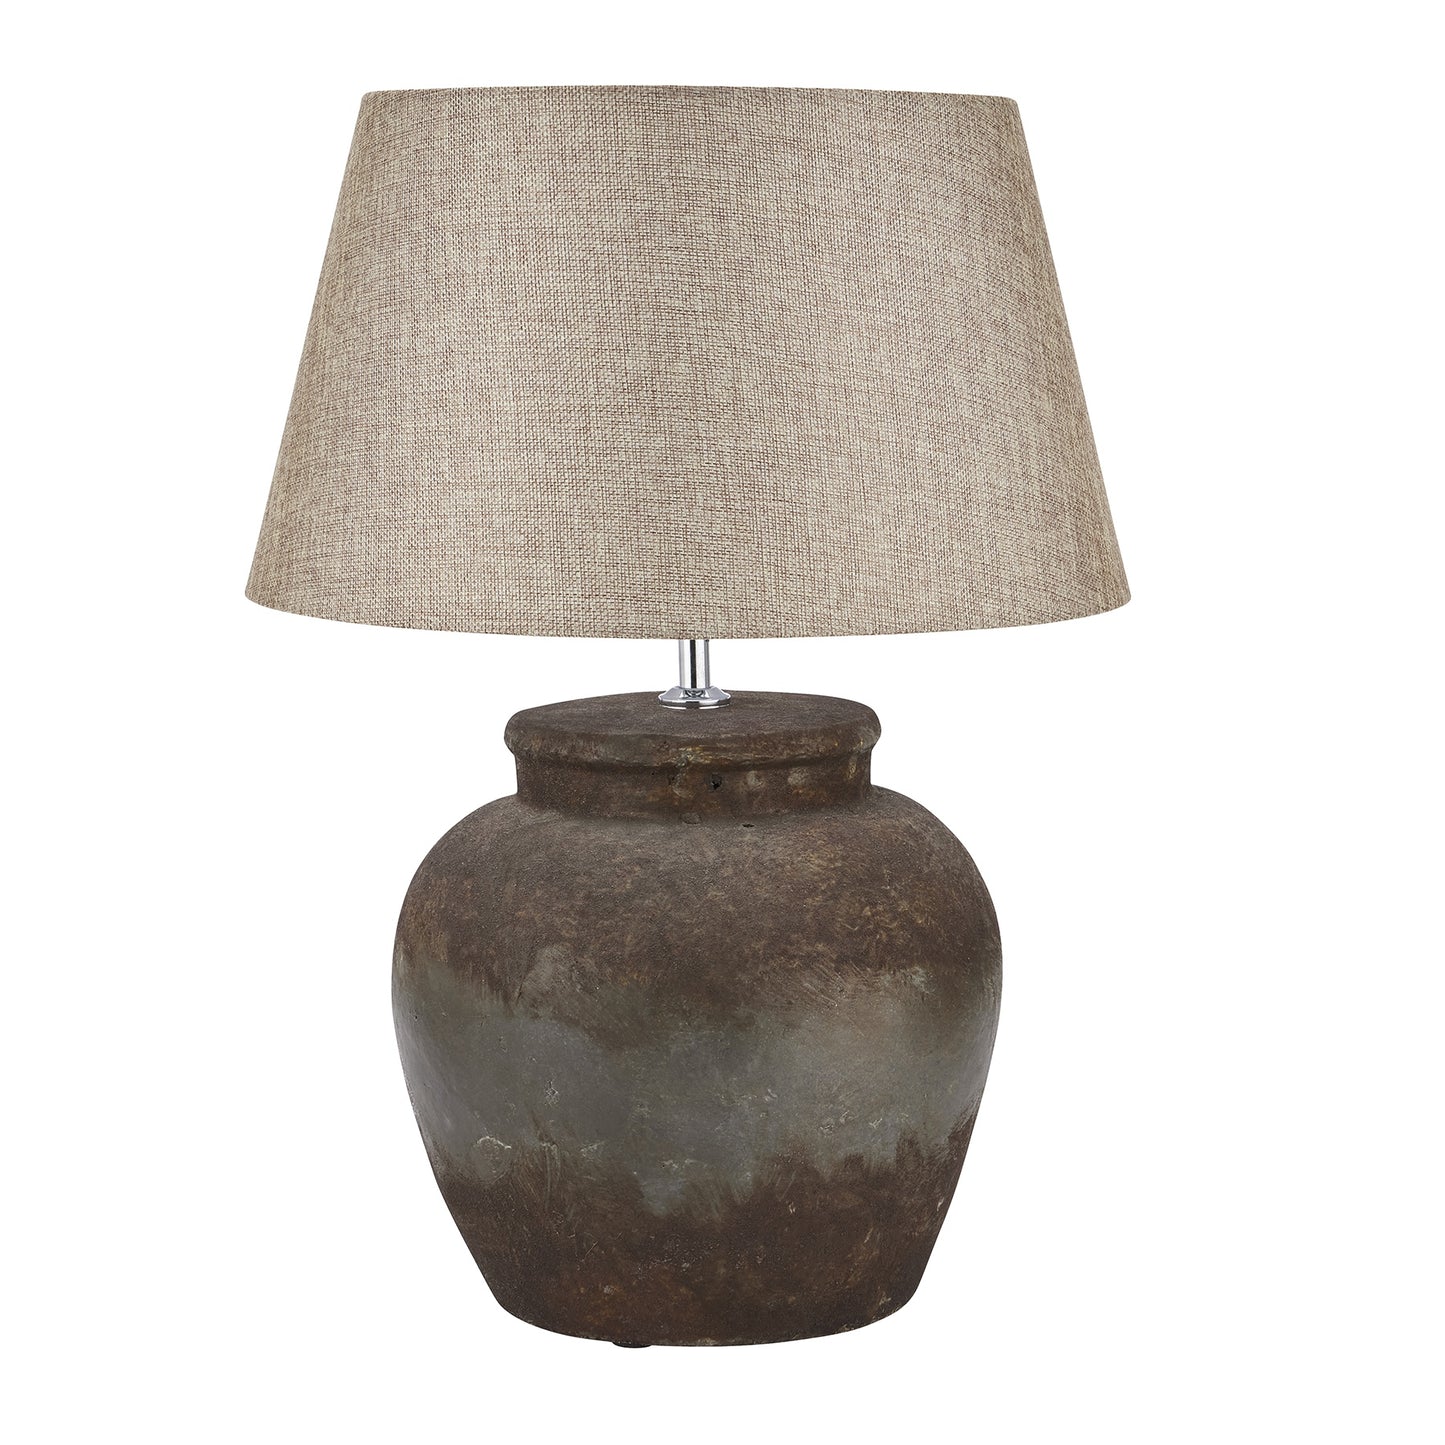 Aged Costello Lamp